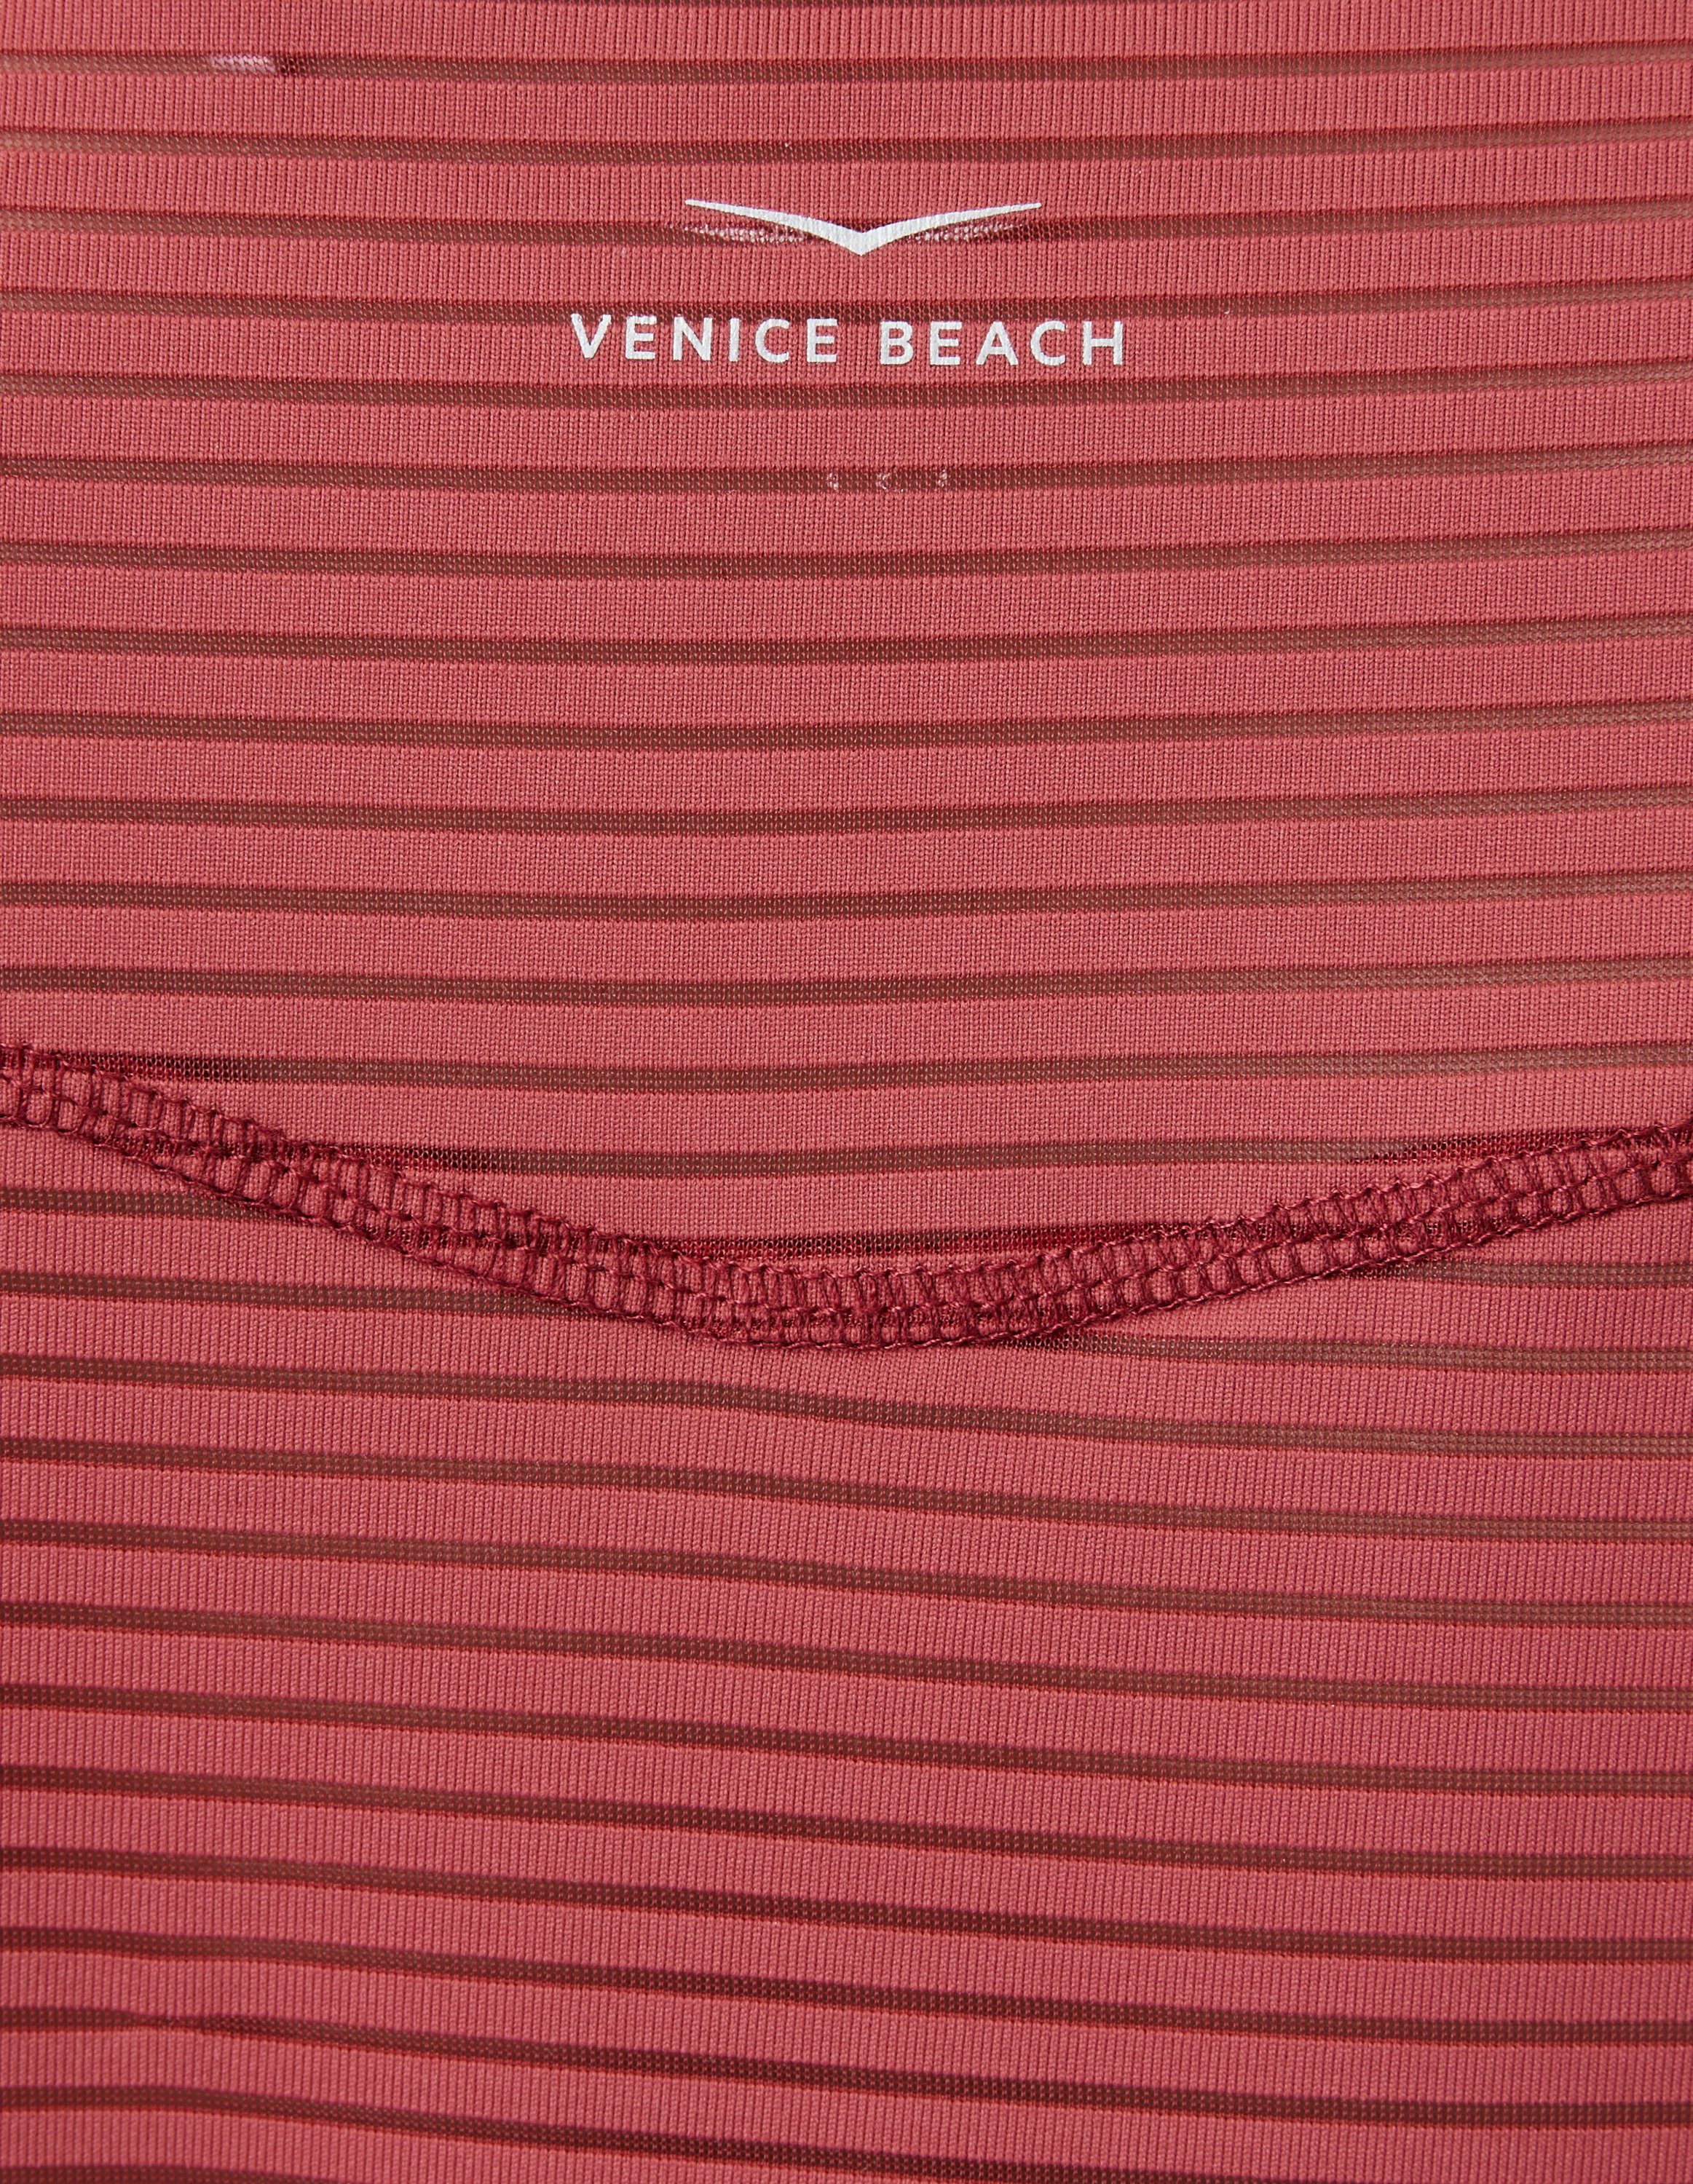 VB T-Shirt Beach T-Shirt Venice Damaris